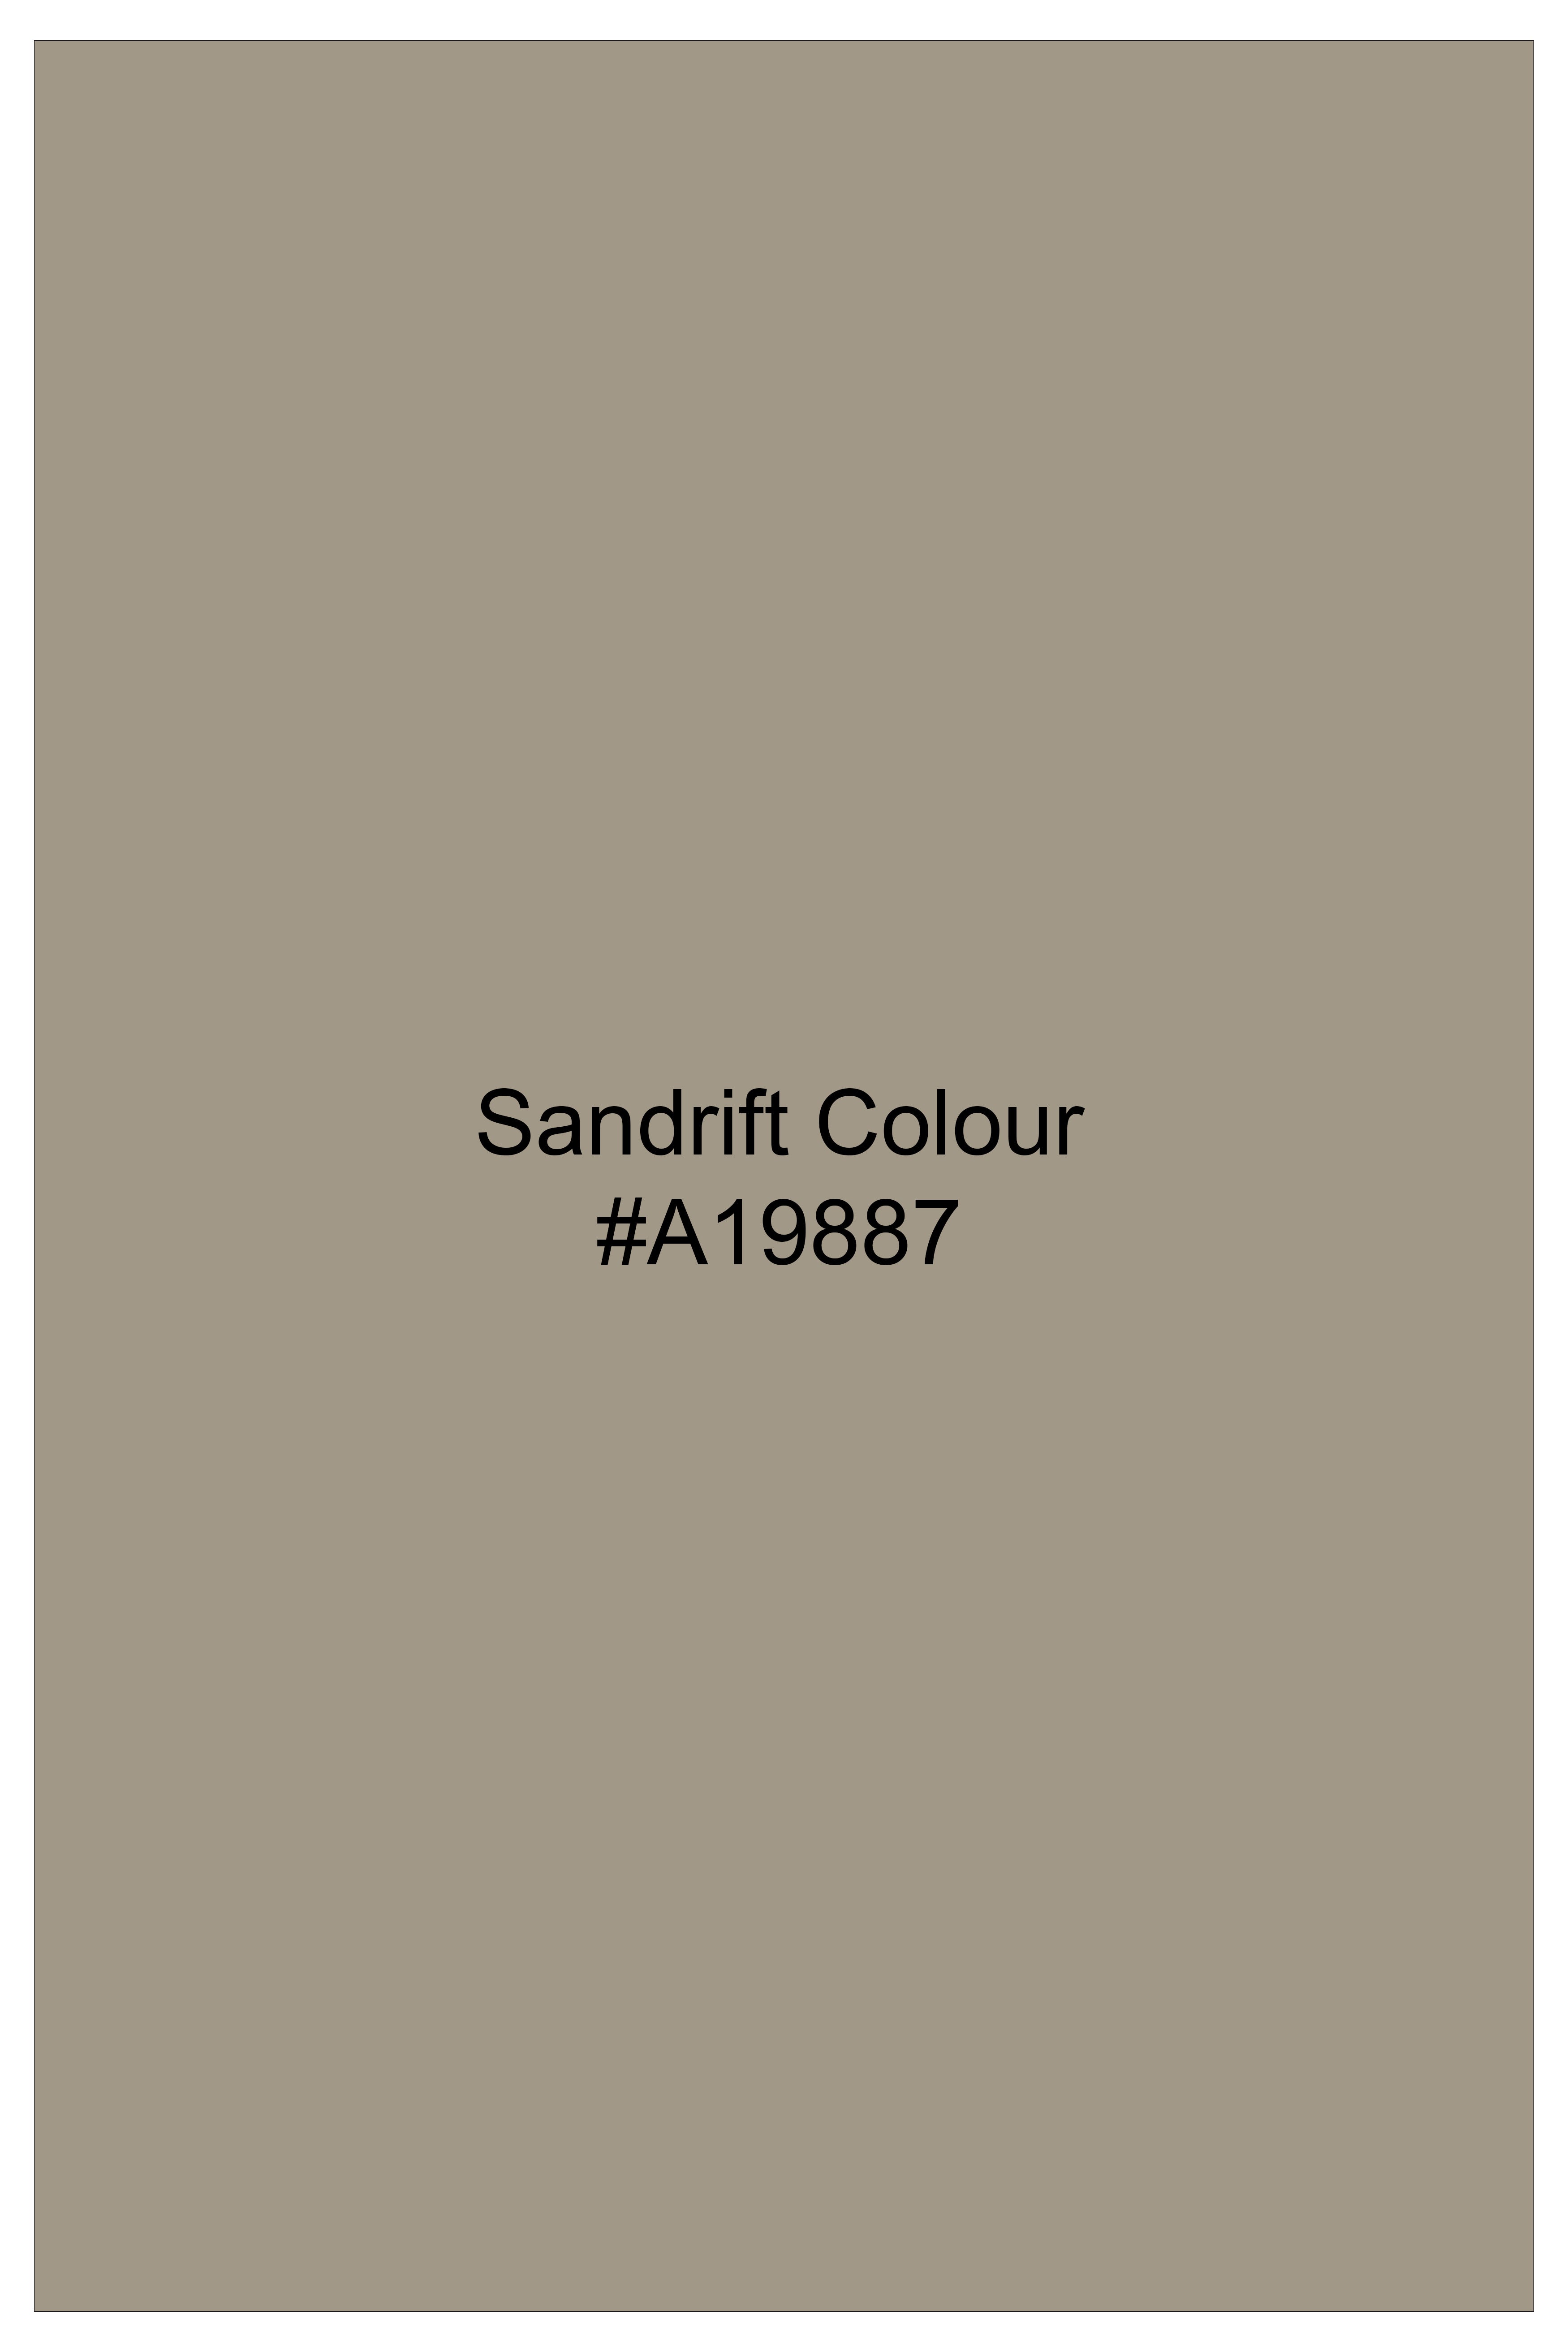 Sandrift Cream Plaid Wool Blend Pant